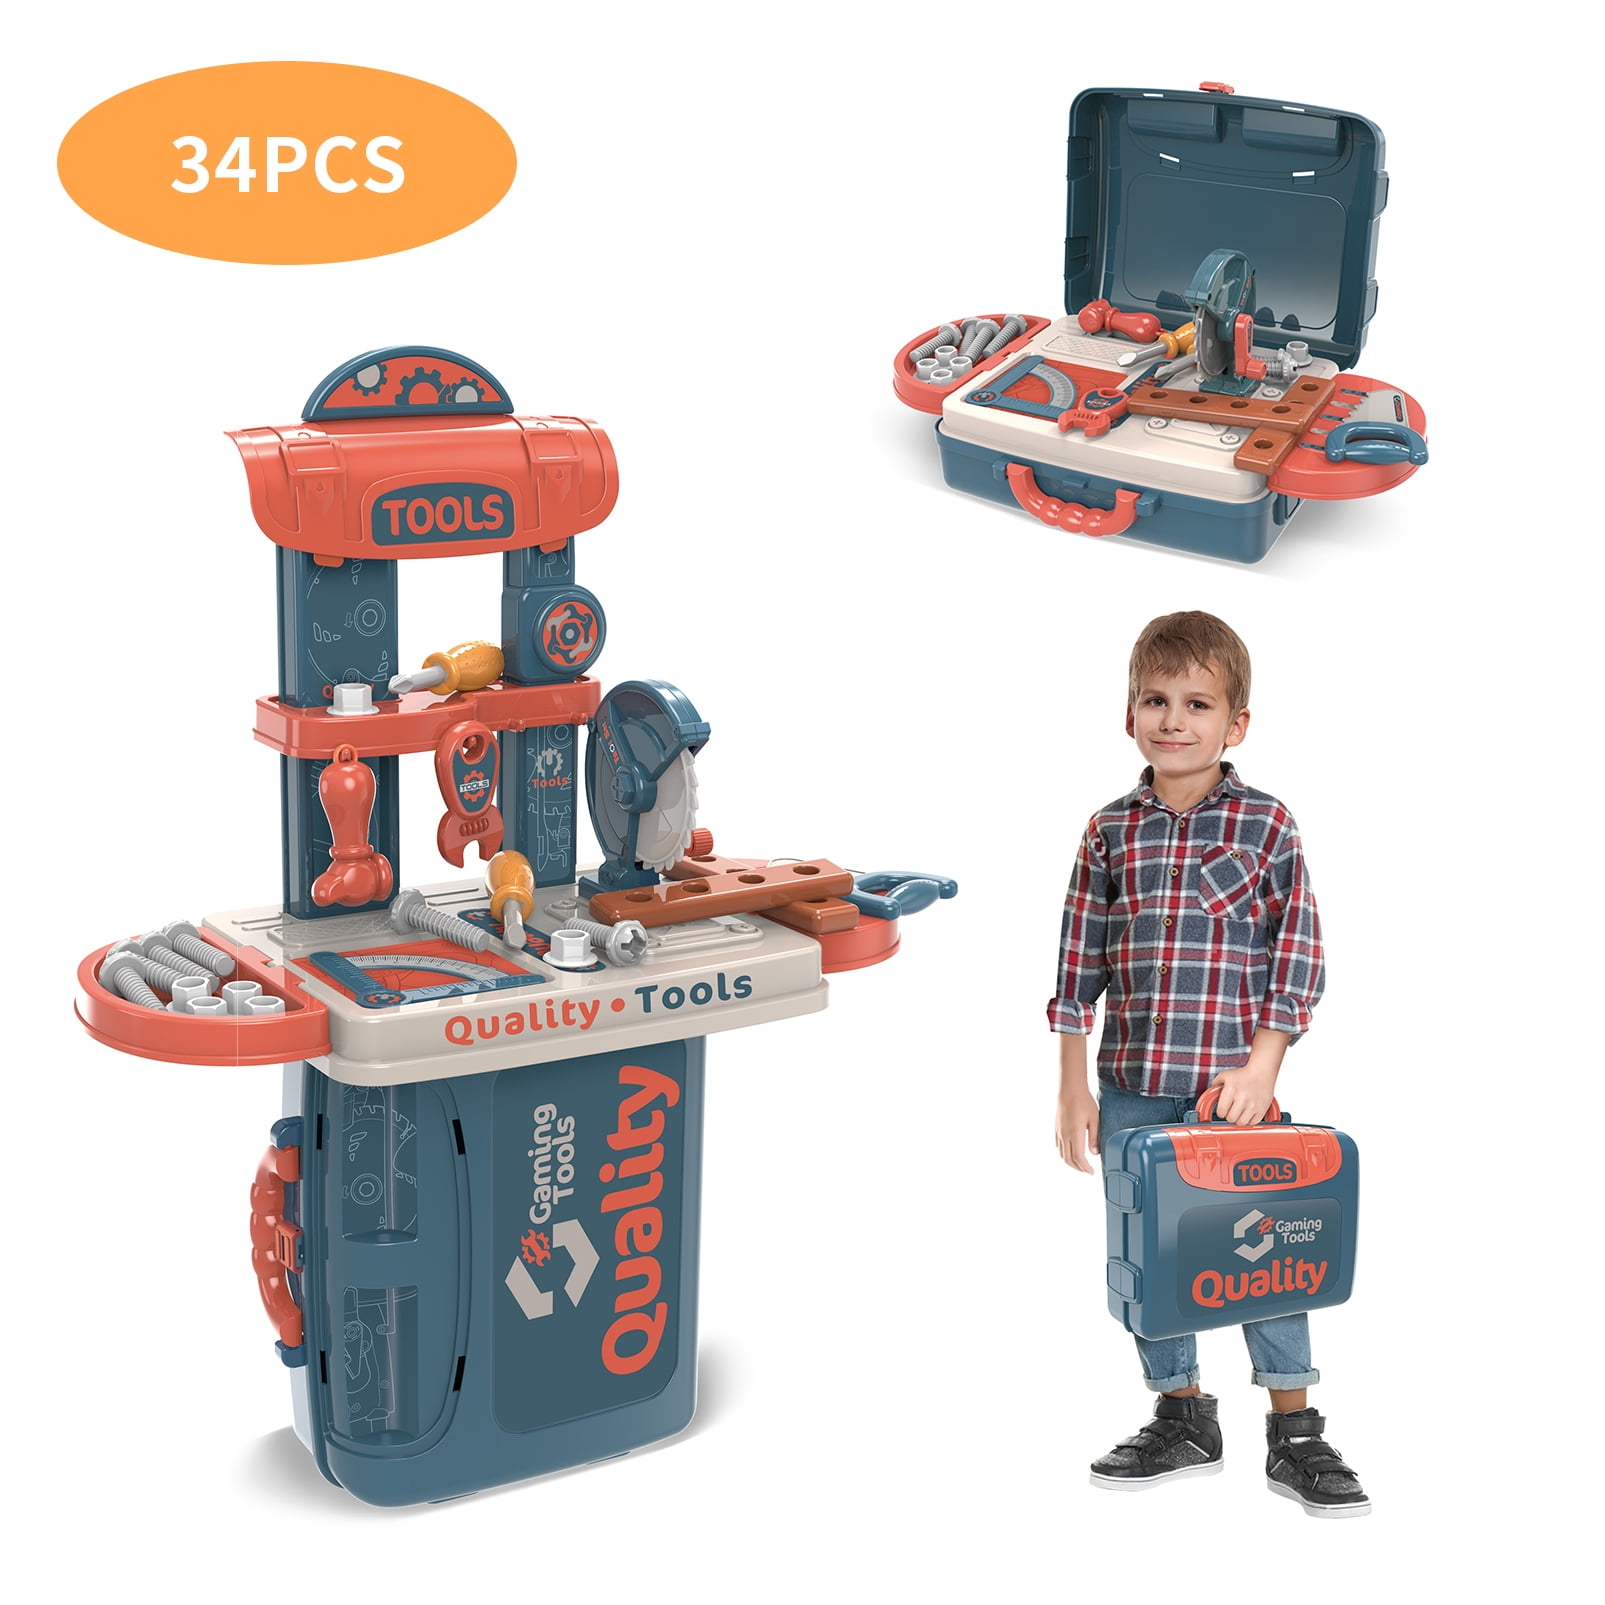 Kids 52pcs Workbench Tools Play Set Children Creative Building Workshop Kit Toy for sale online 